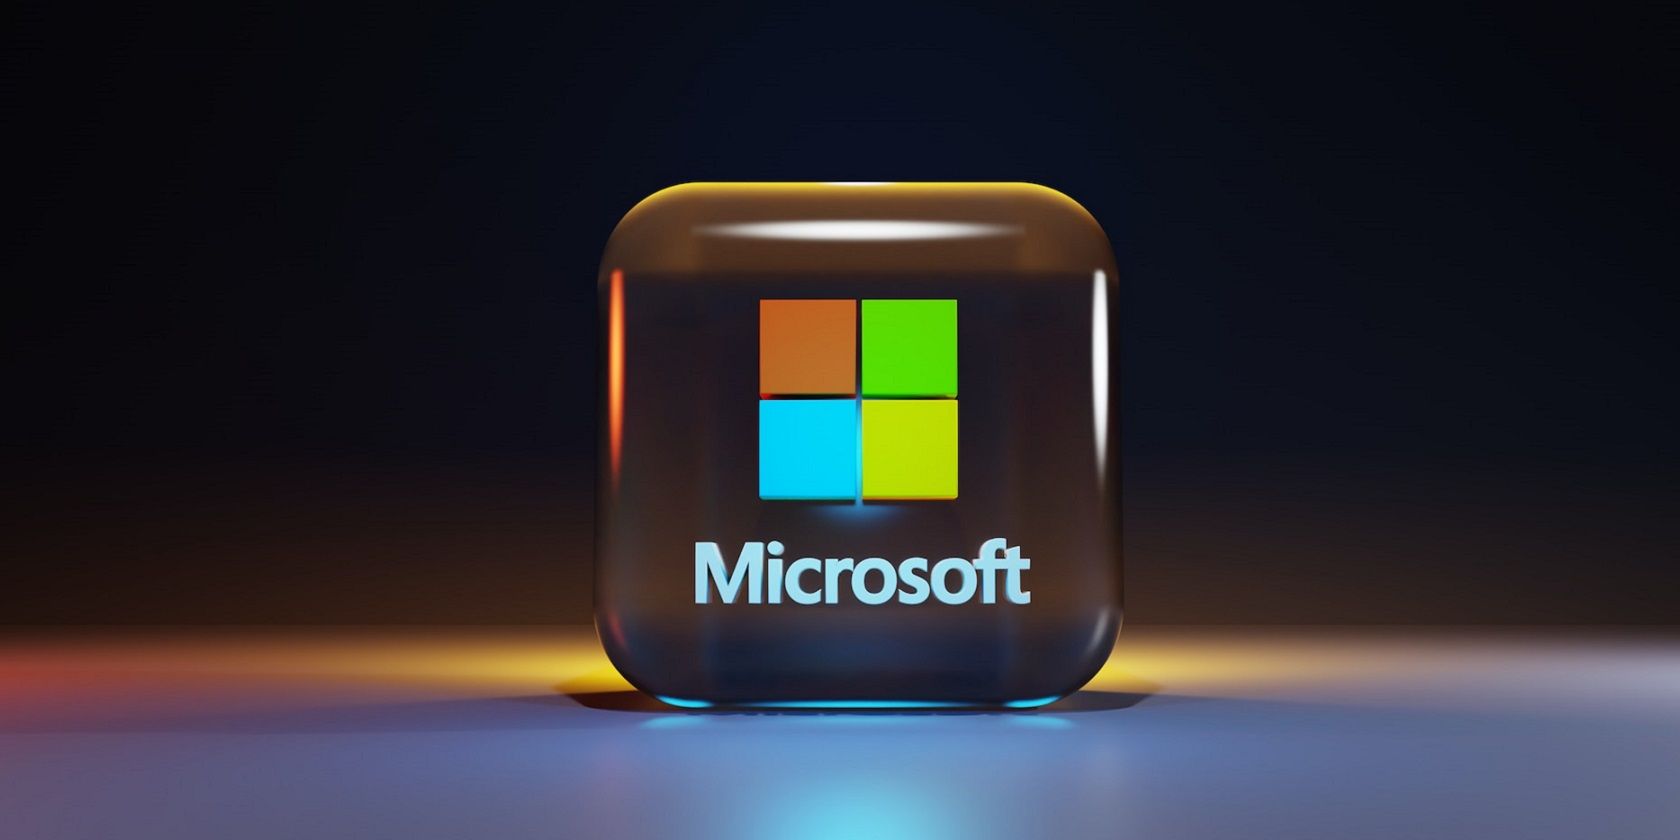 Microsoft Logo.jpg